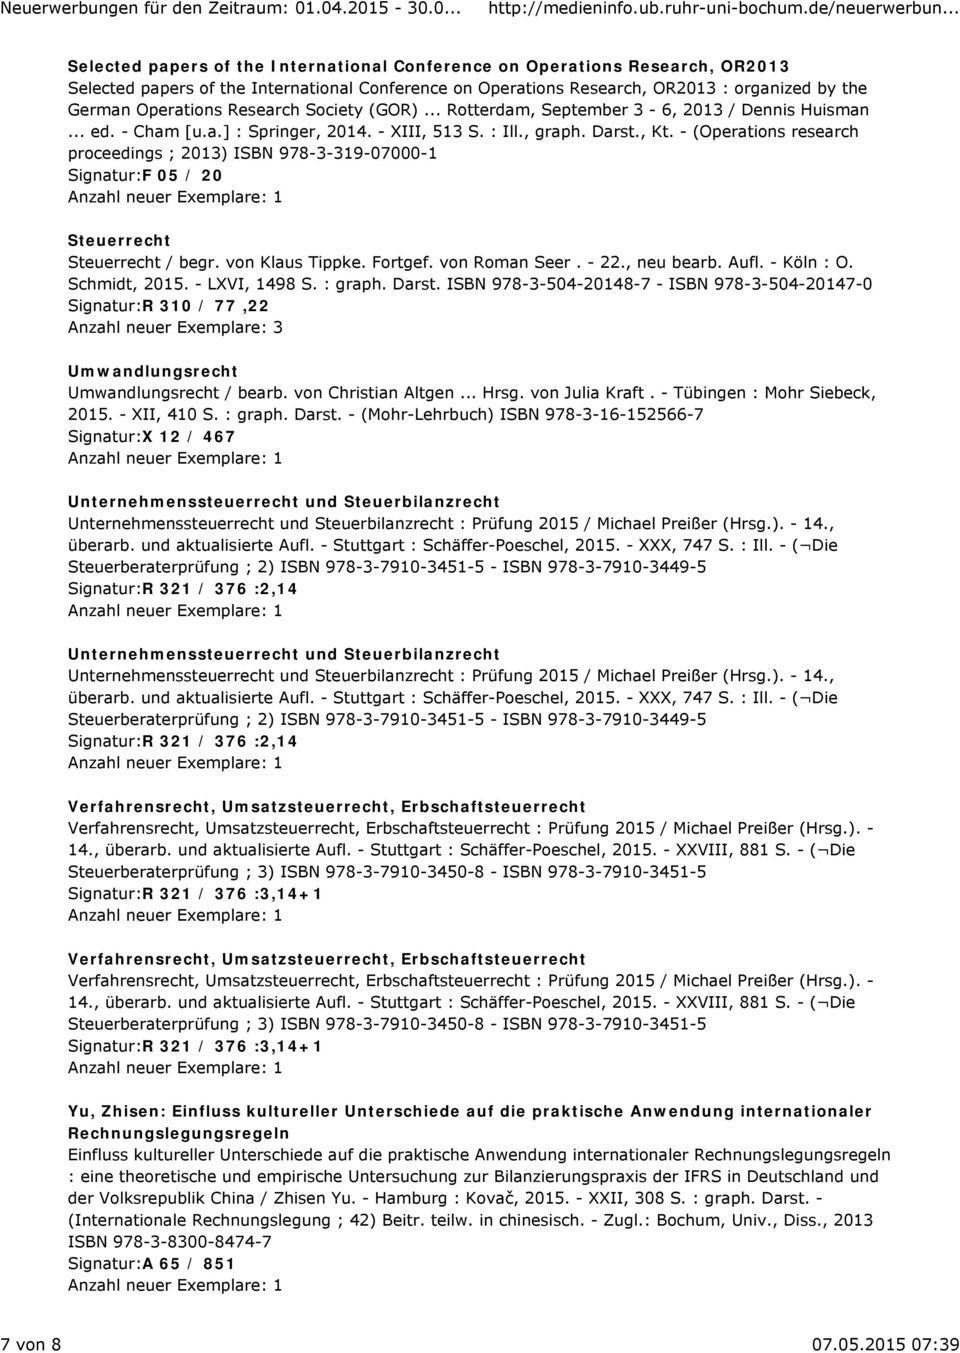 - (Operations research proceedings ; 2013) ISBN 978-3-319-07000-1 Signatur:F 05 / 20 Steuerrecht Steuerrecht / begr. von Klaus Tippke. Fortgef. von Roman Seer. - 22., neu bearb. Aufl. - Köln : O.